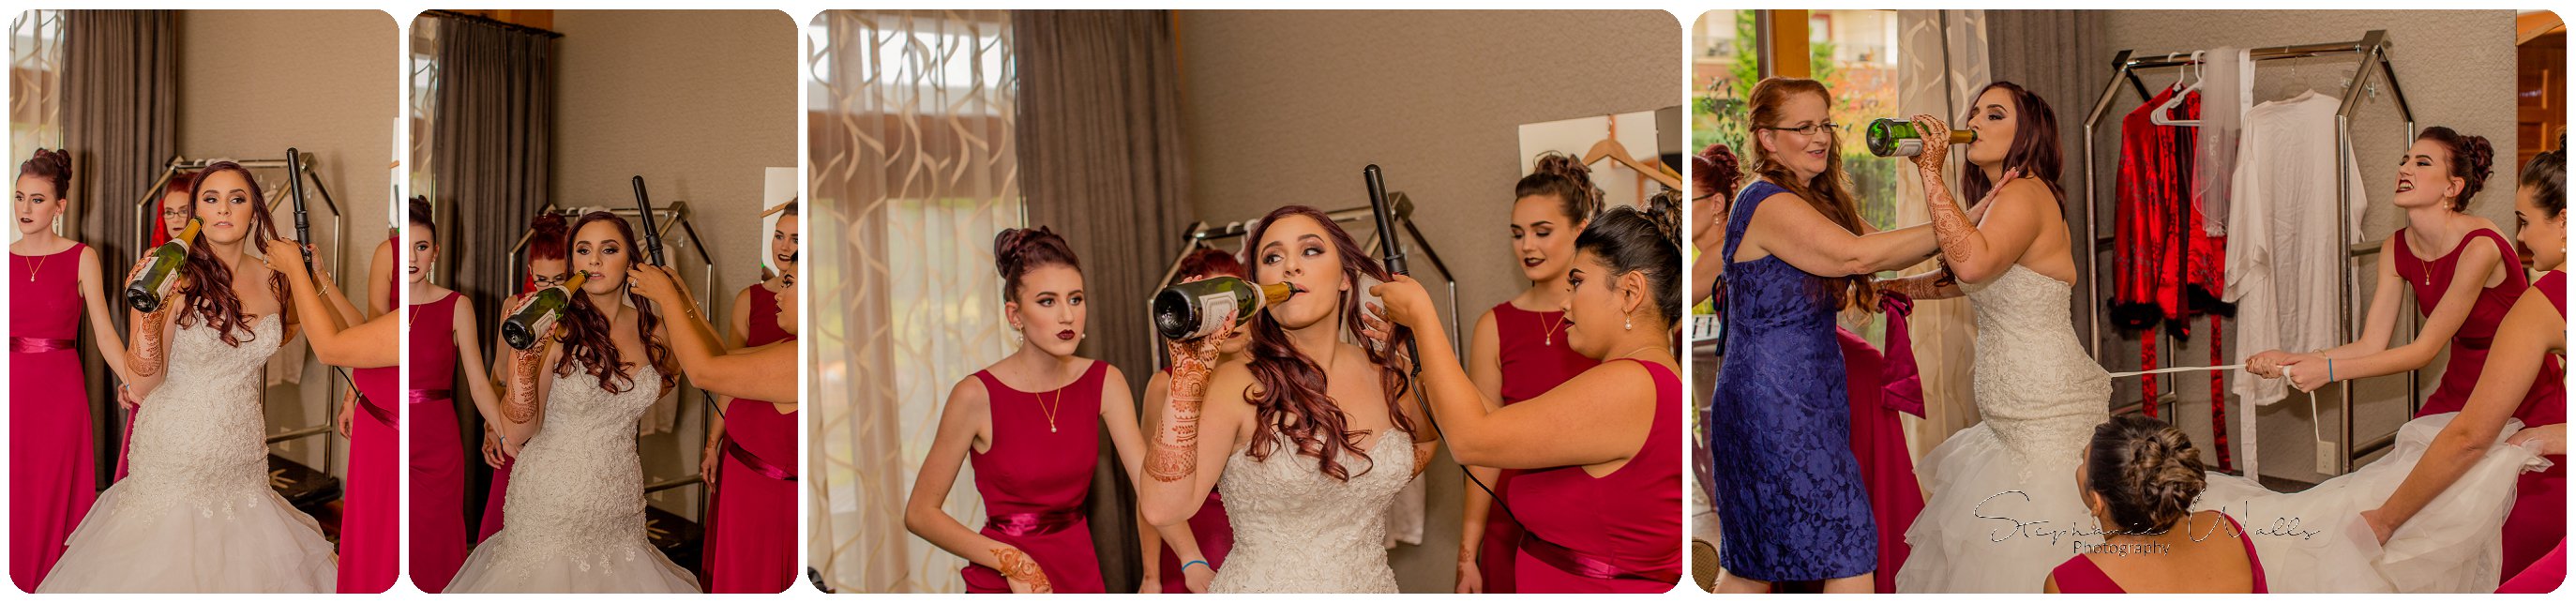 Bride Bridesmaids 068 Megan & Mo’s Day 2 | Willow Lodge Wedding | Woodinville, Wa Wedding Photographer